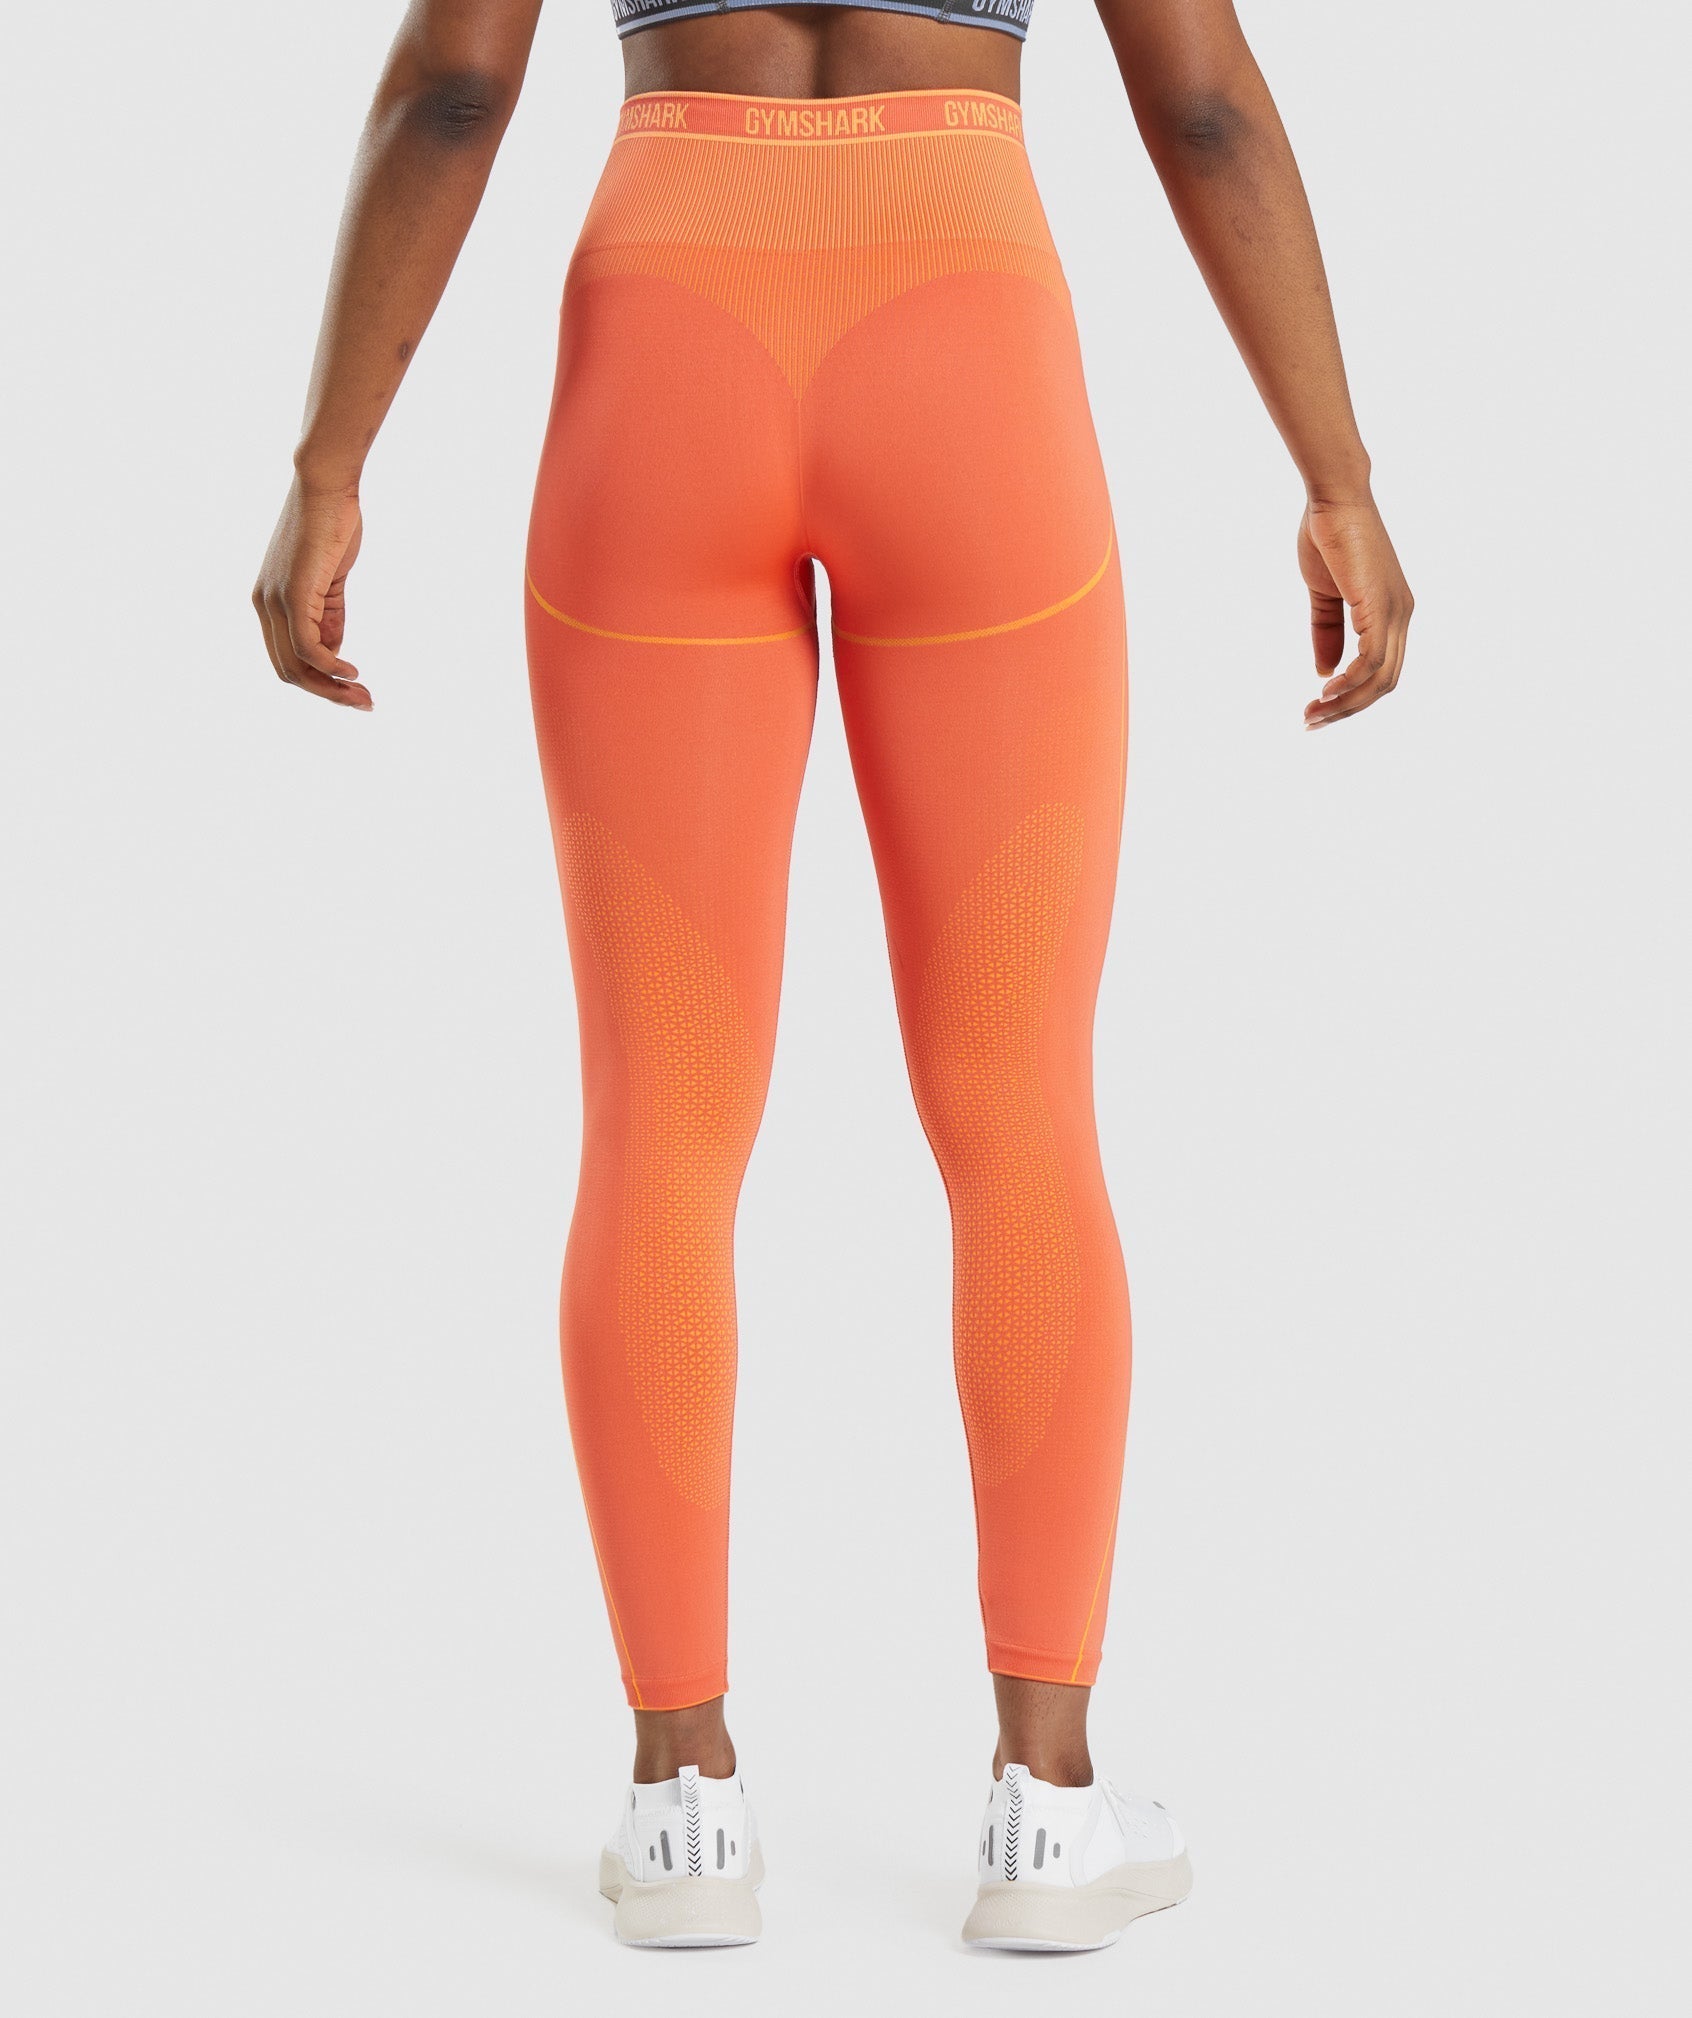 GYMSHARK Orange Flawless Knit Leggings on Mercari